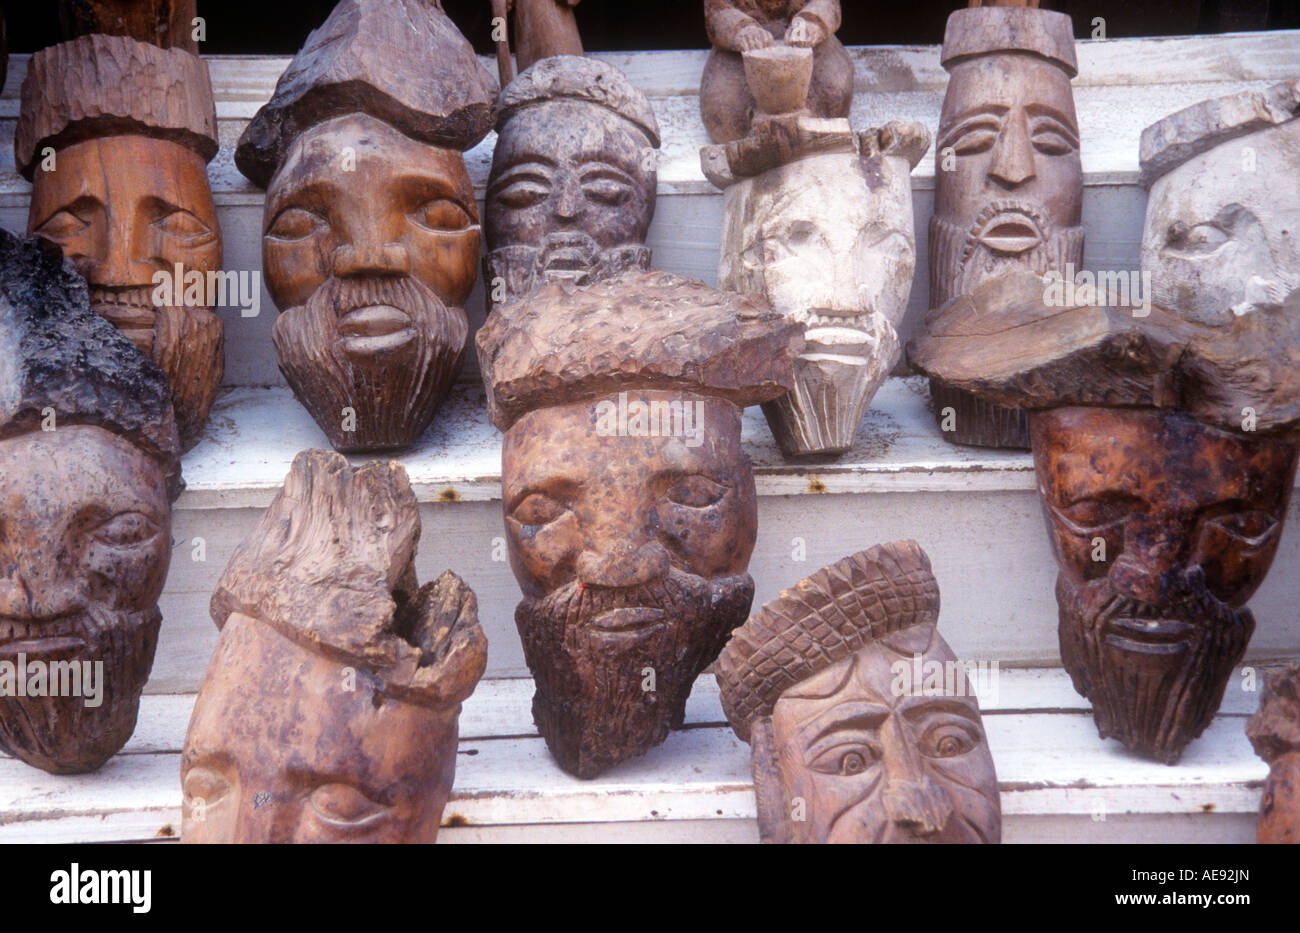 Geschnitzte Masken aus Thuja Holz, Skala de Ville, Essaouira, Marokko Stockfoto